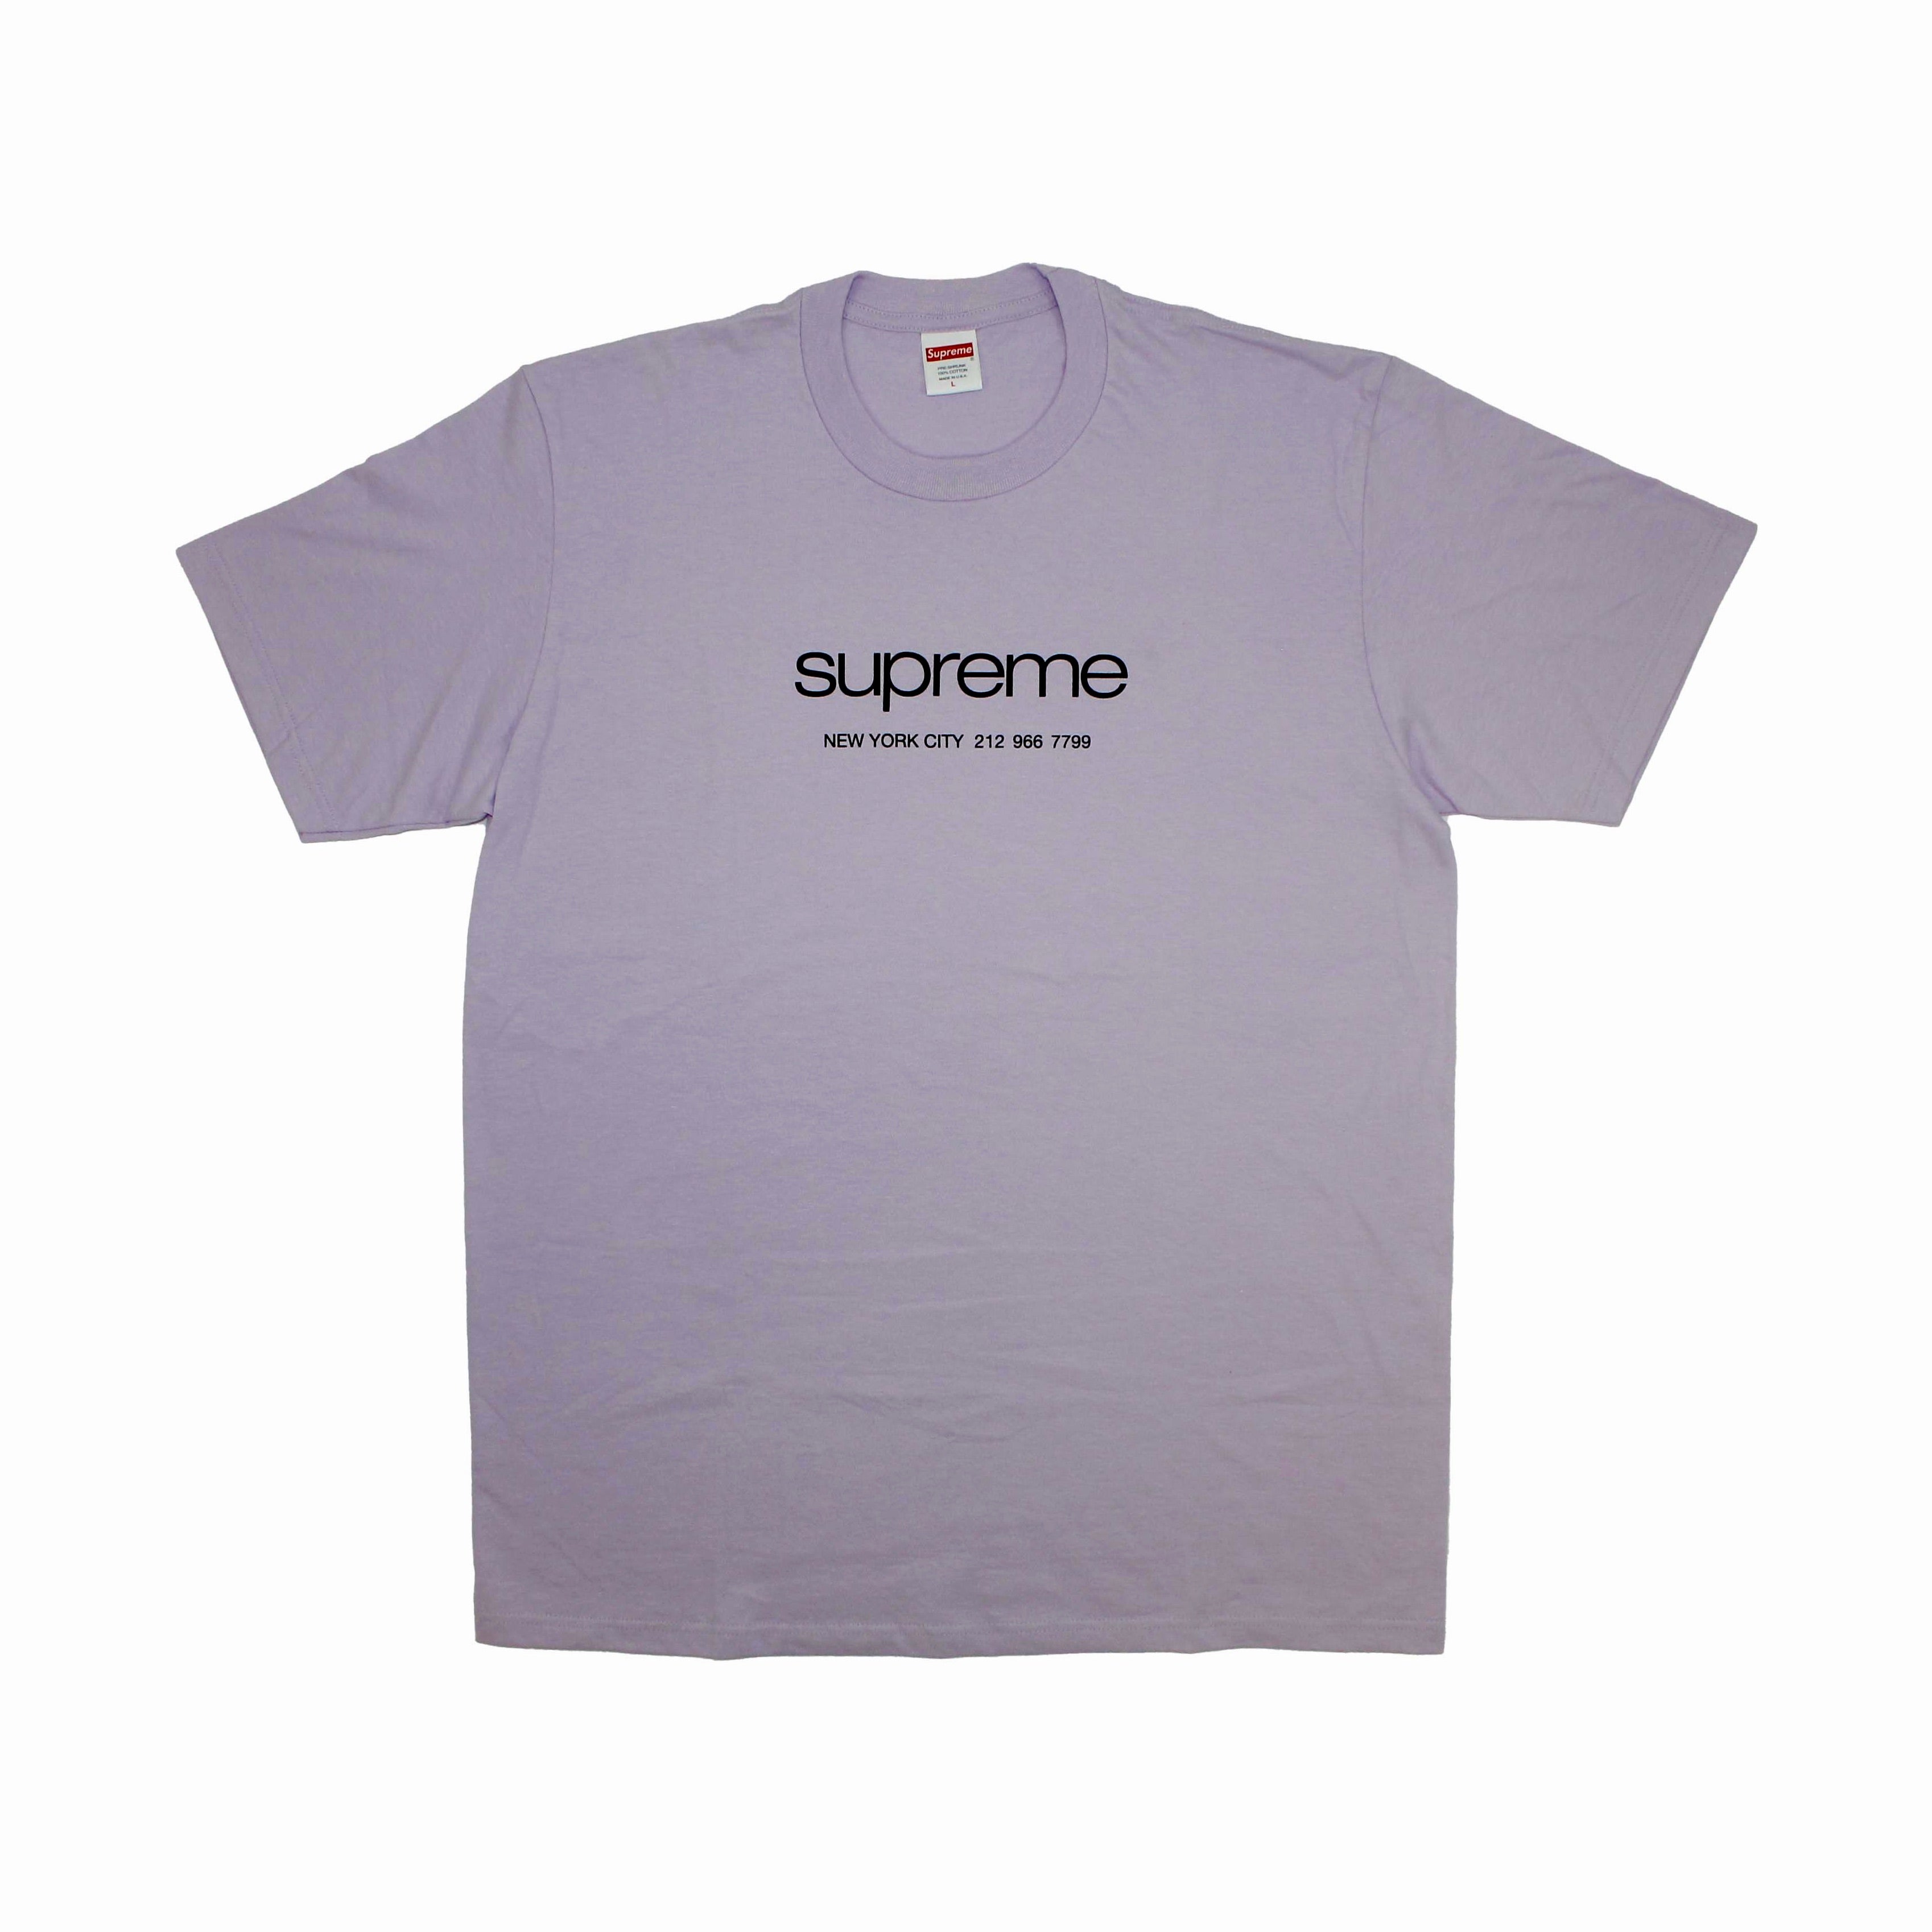 Supreme Shop T-Shirt